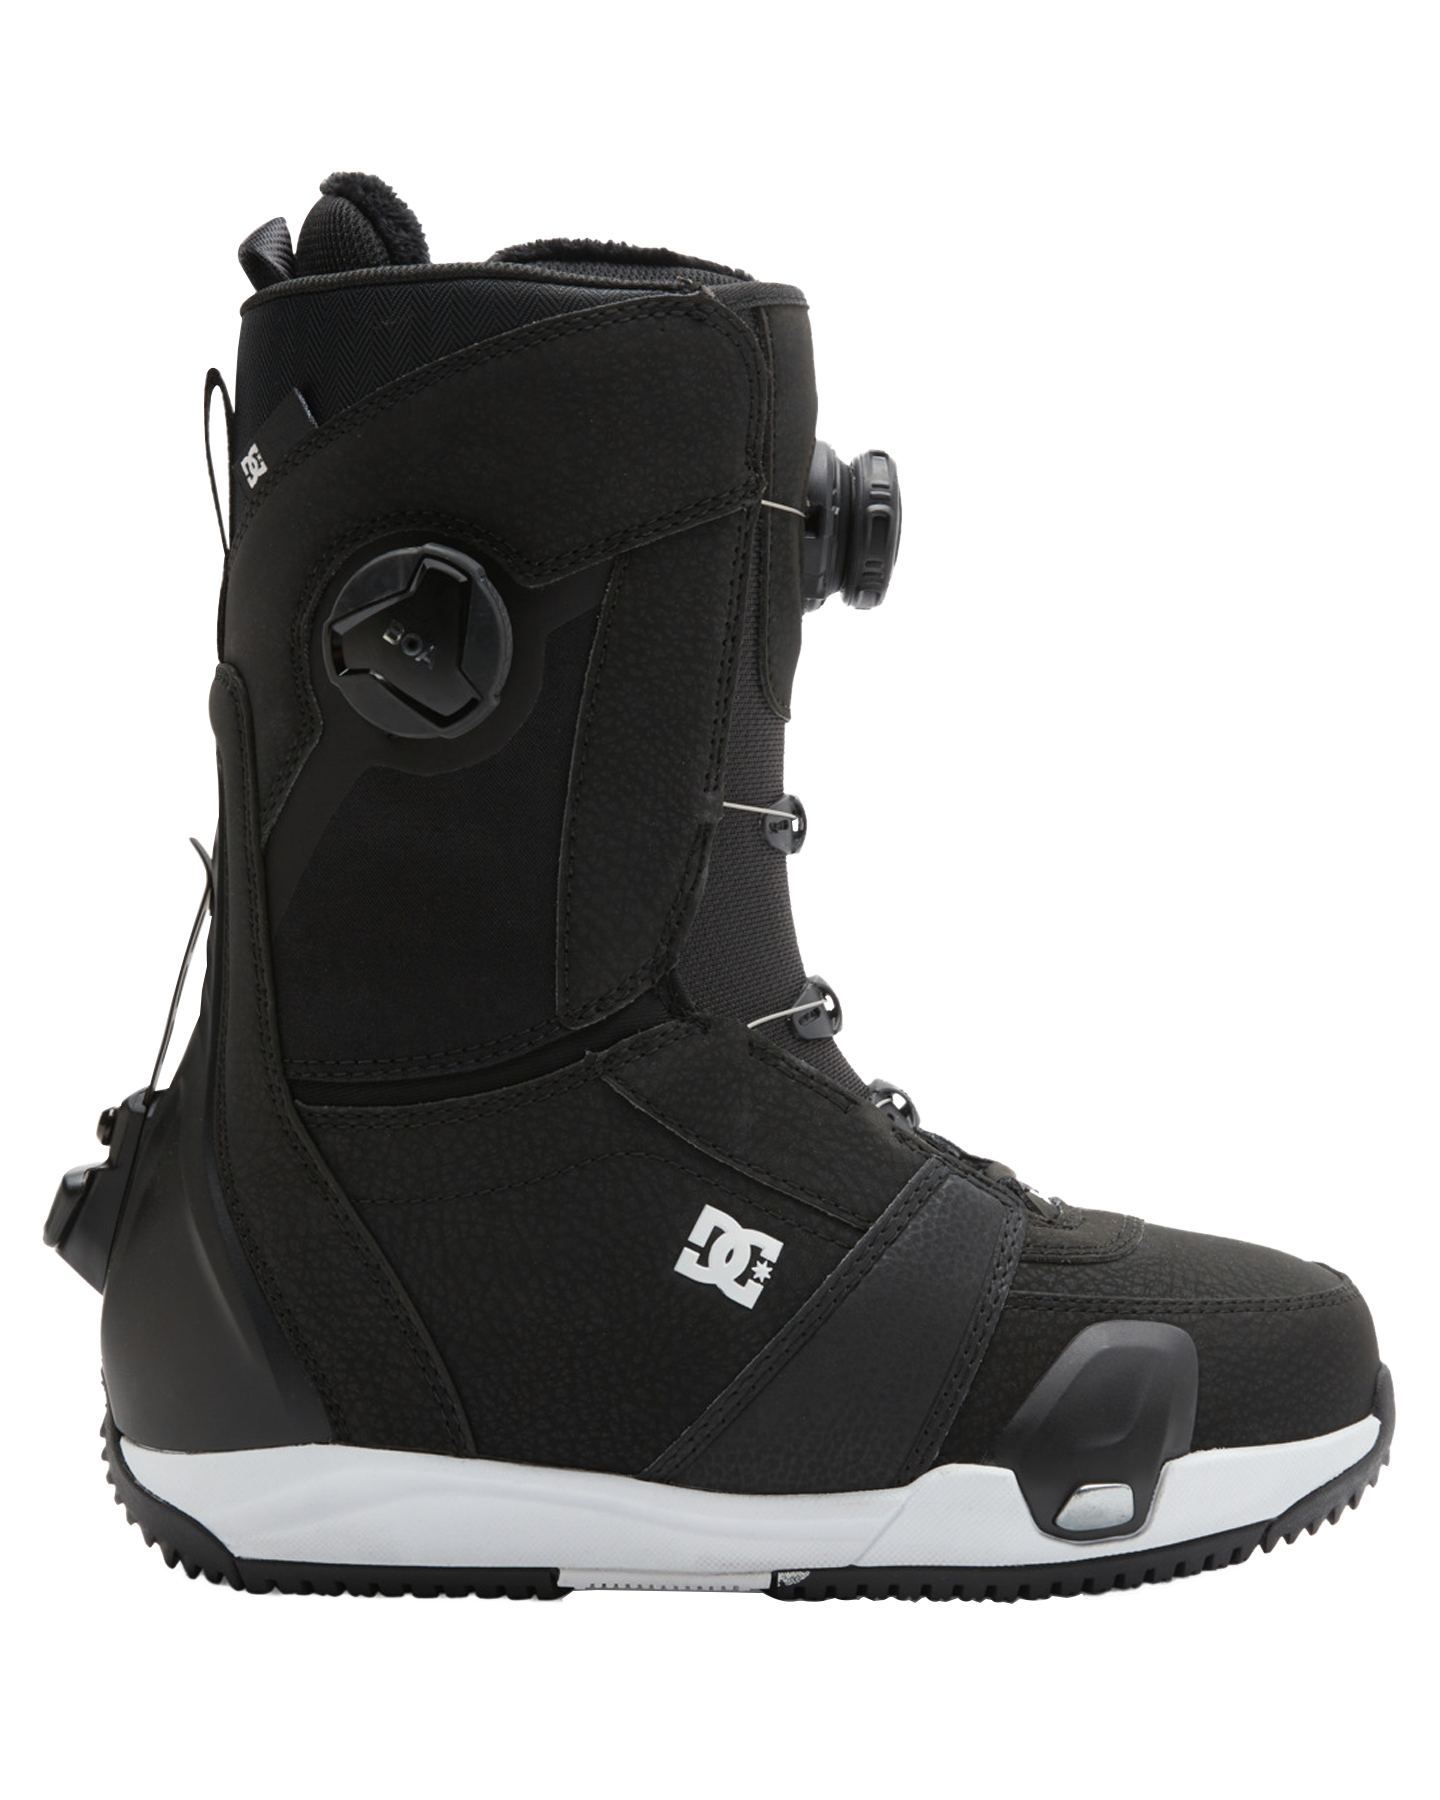 DC Women's Lotus Step On® Snowboard Boots - Black/White Snowboard Boots - Womens - Trojan Wake Ski Snow